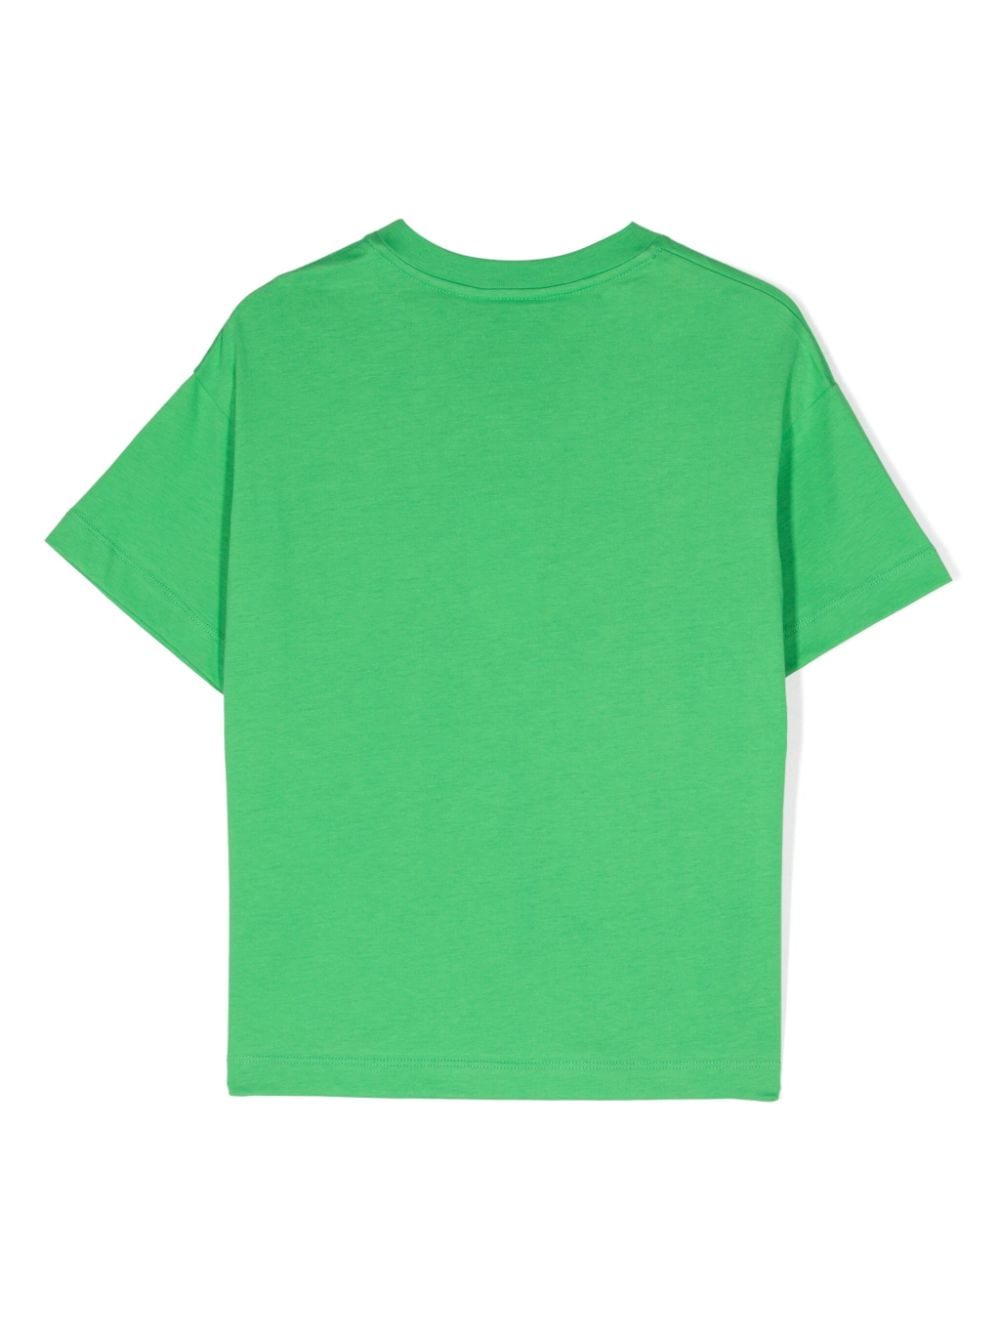 Green cotton jersey boy FENDI t-shirt